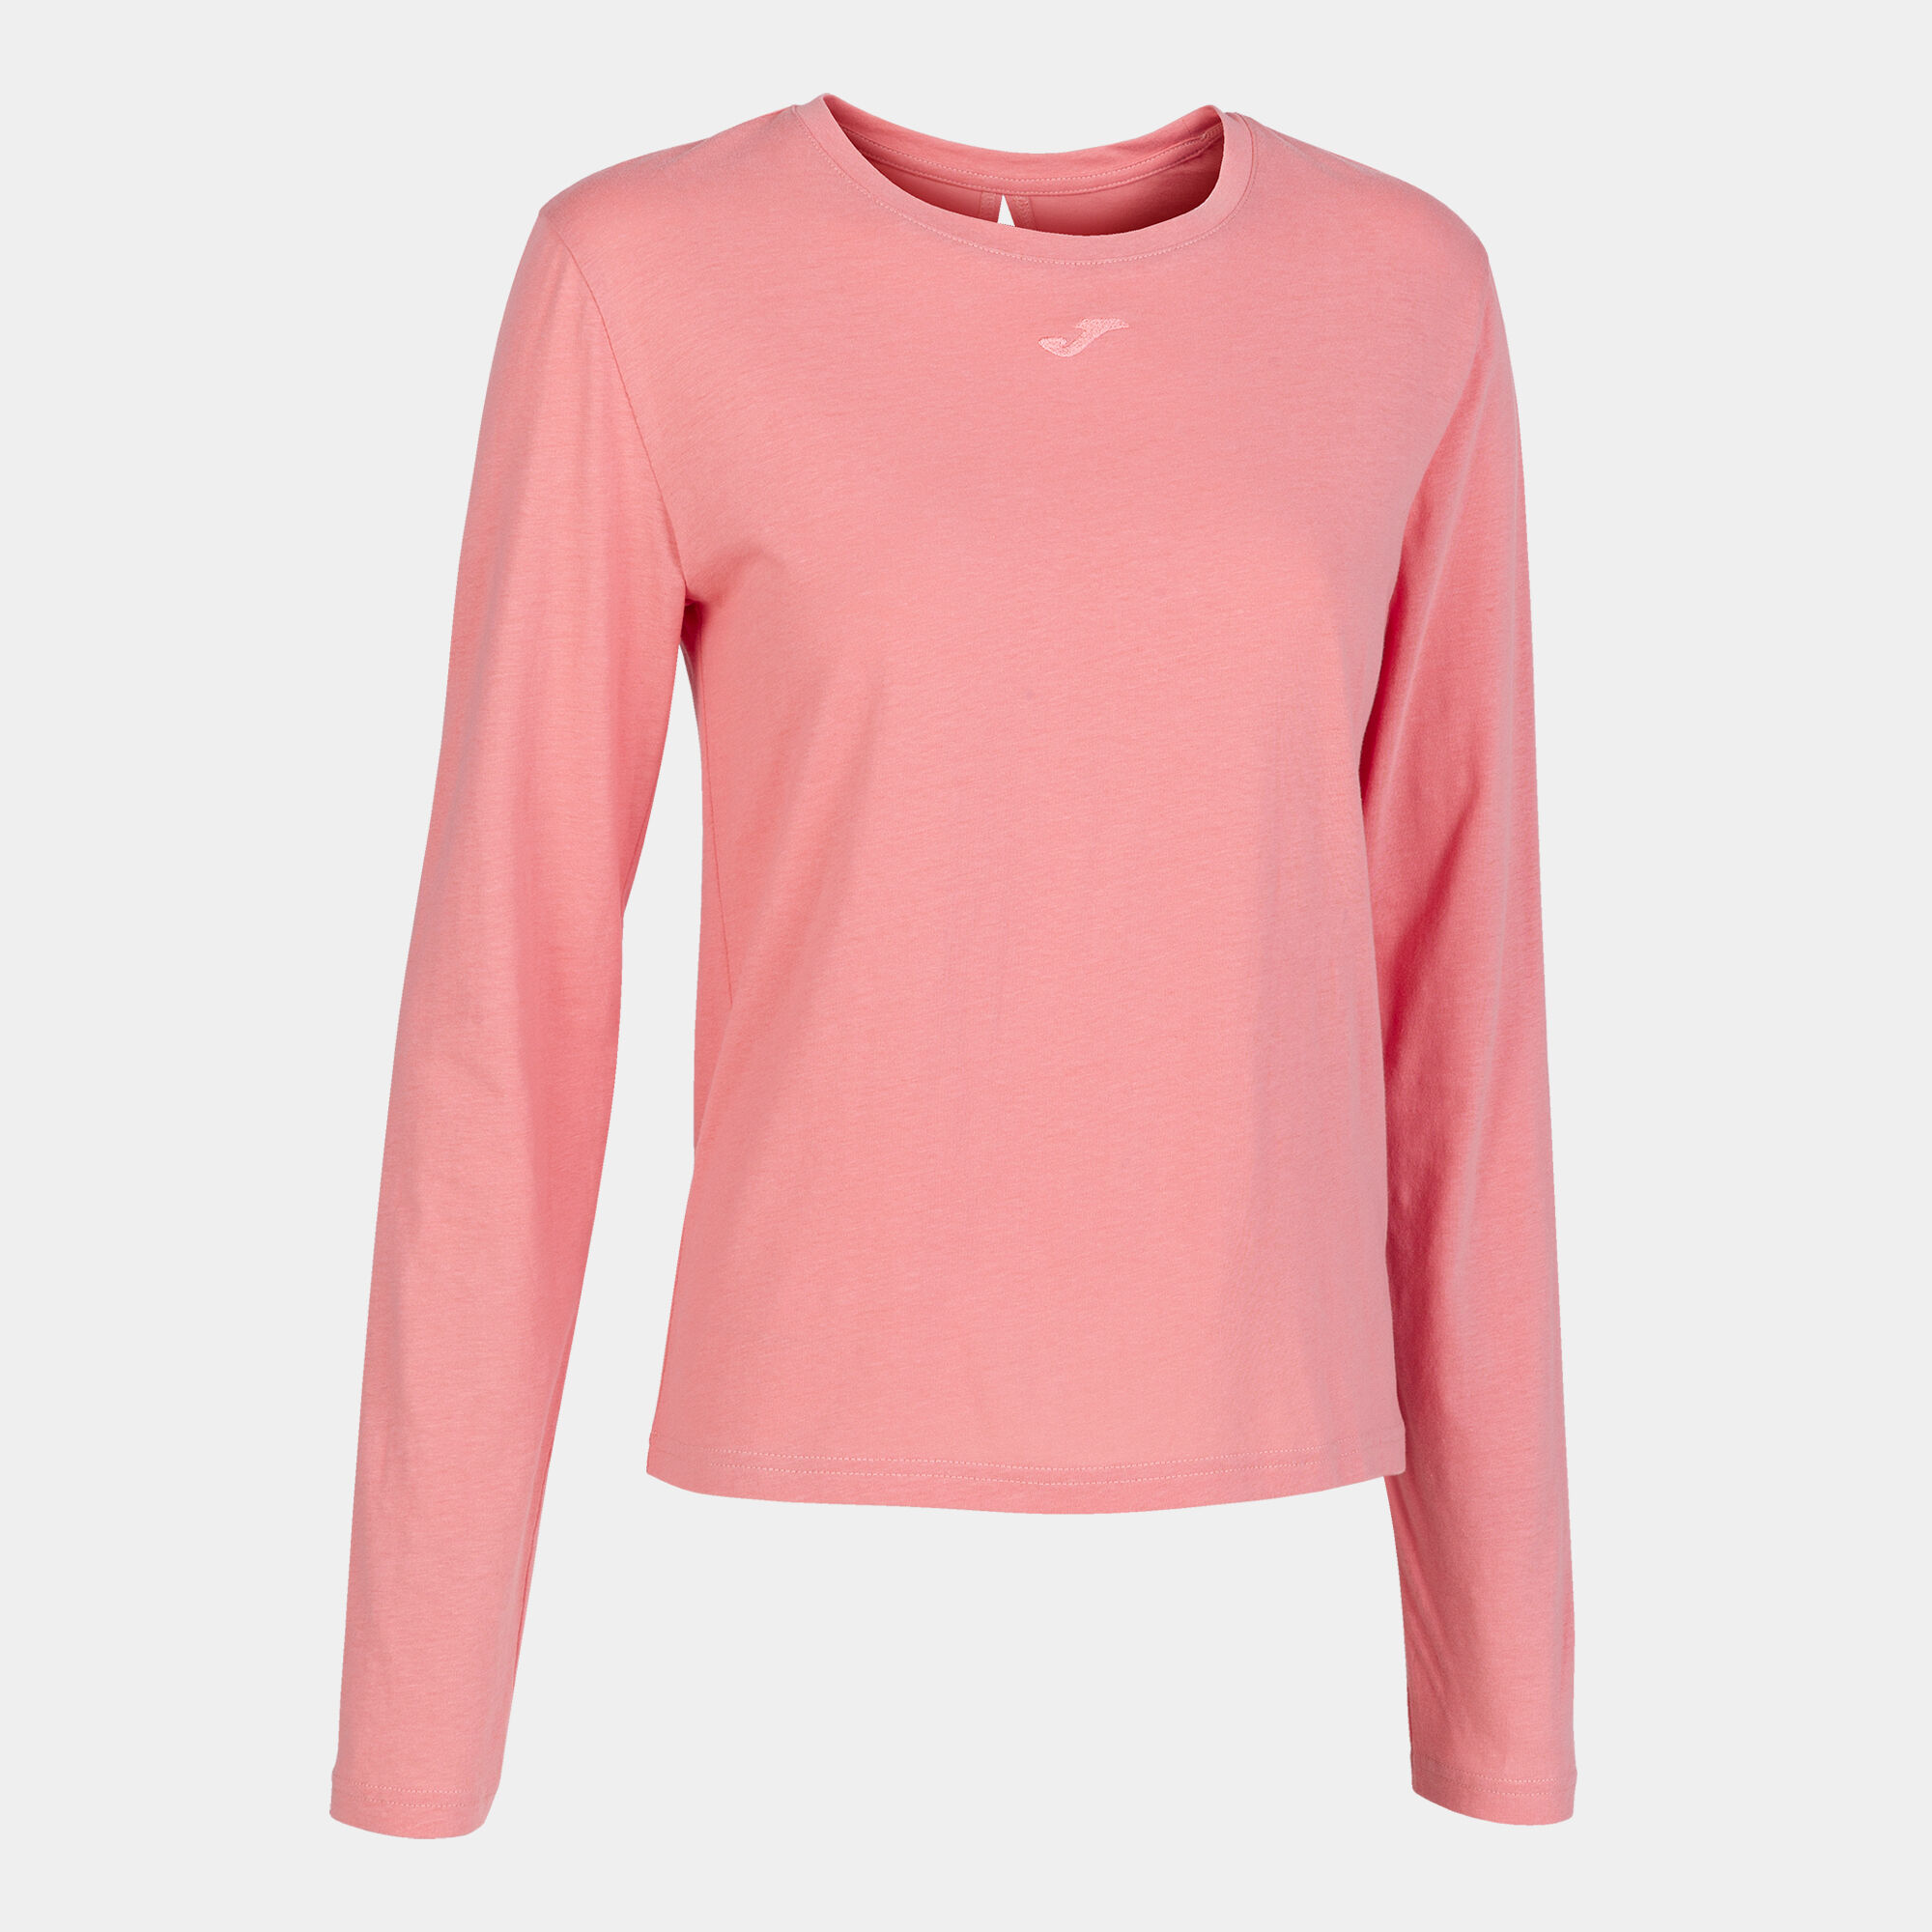 Camiseta manga larga mujer Organic rosa